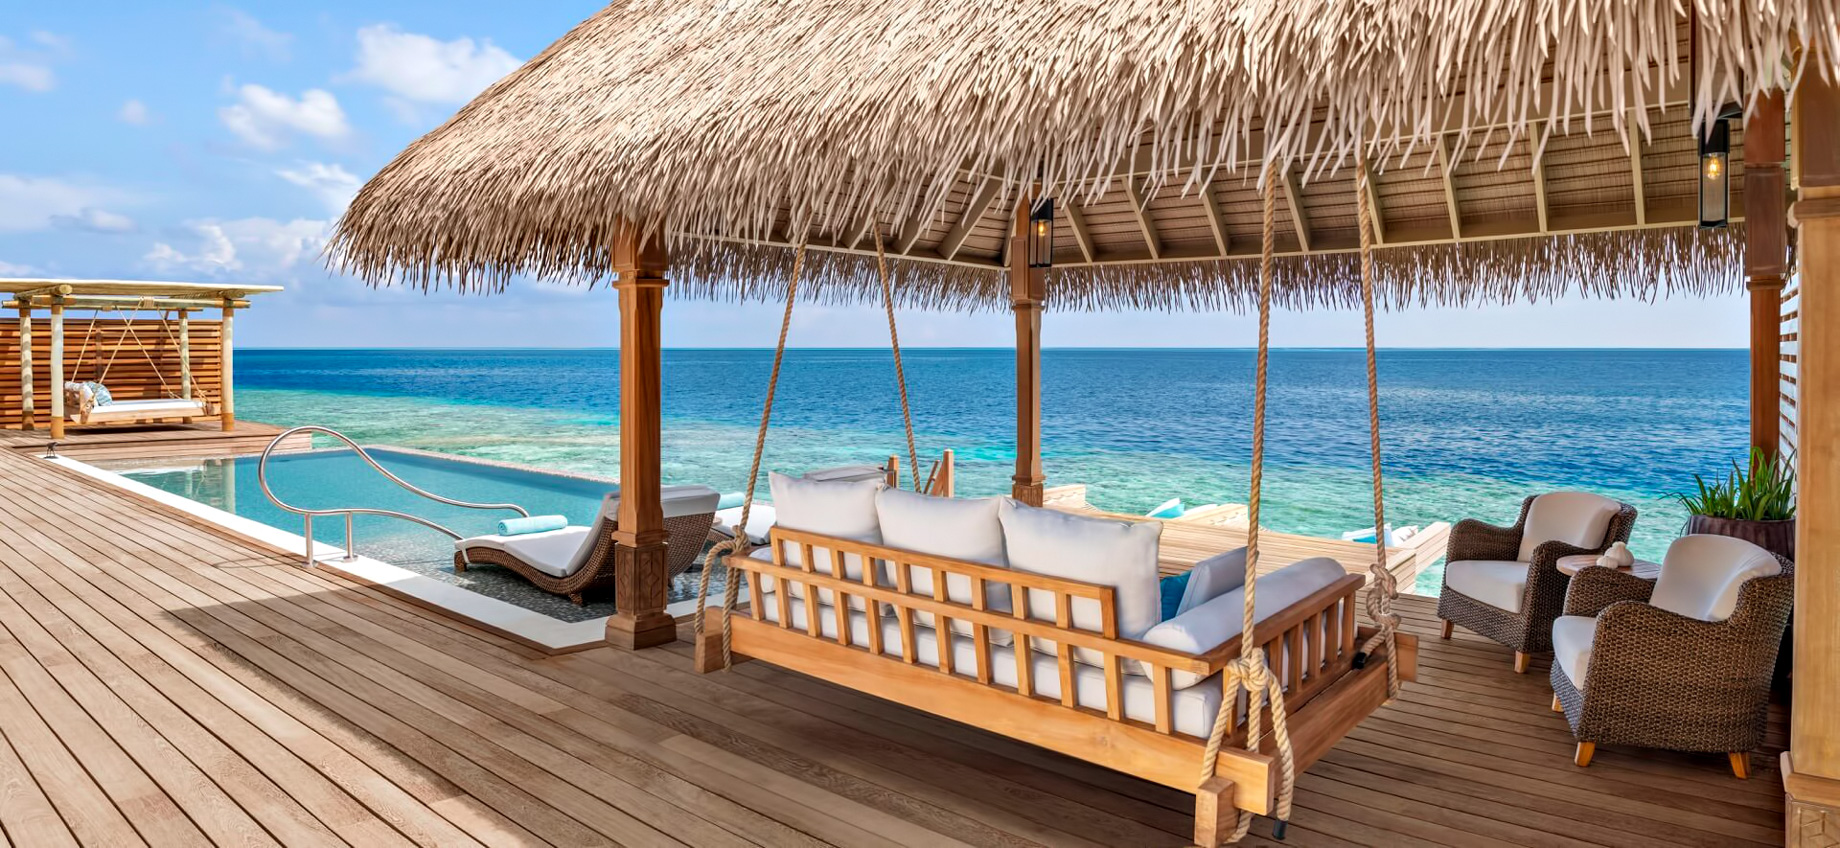 Waldorf Astoria Maldives Ithaafushi Resort – Ithaafushi Island, Maldives – Overwater Villa Deck Pool Swing